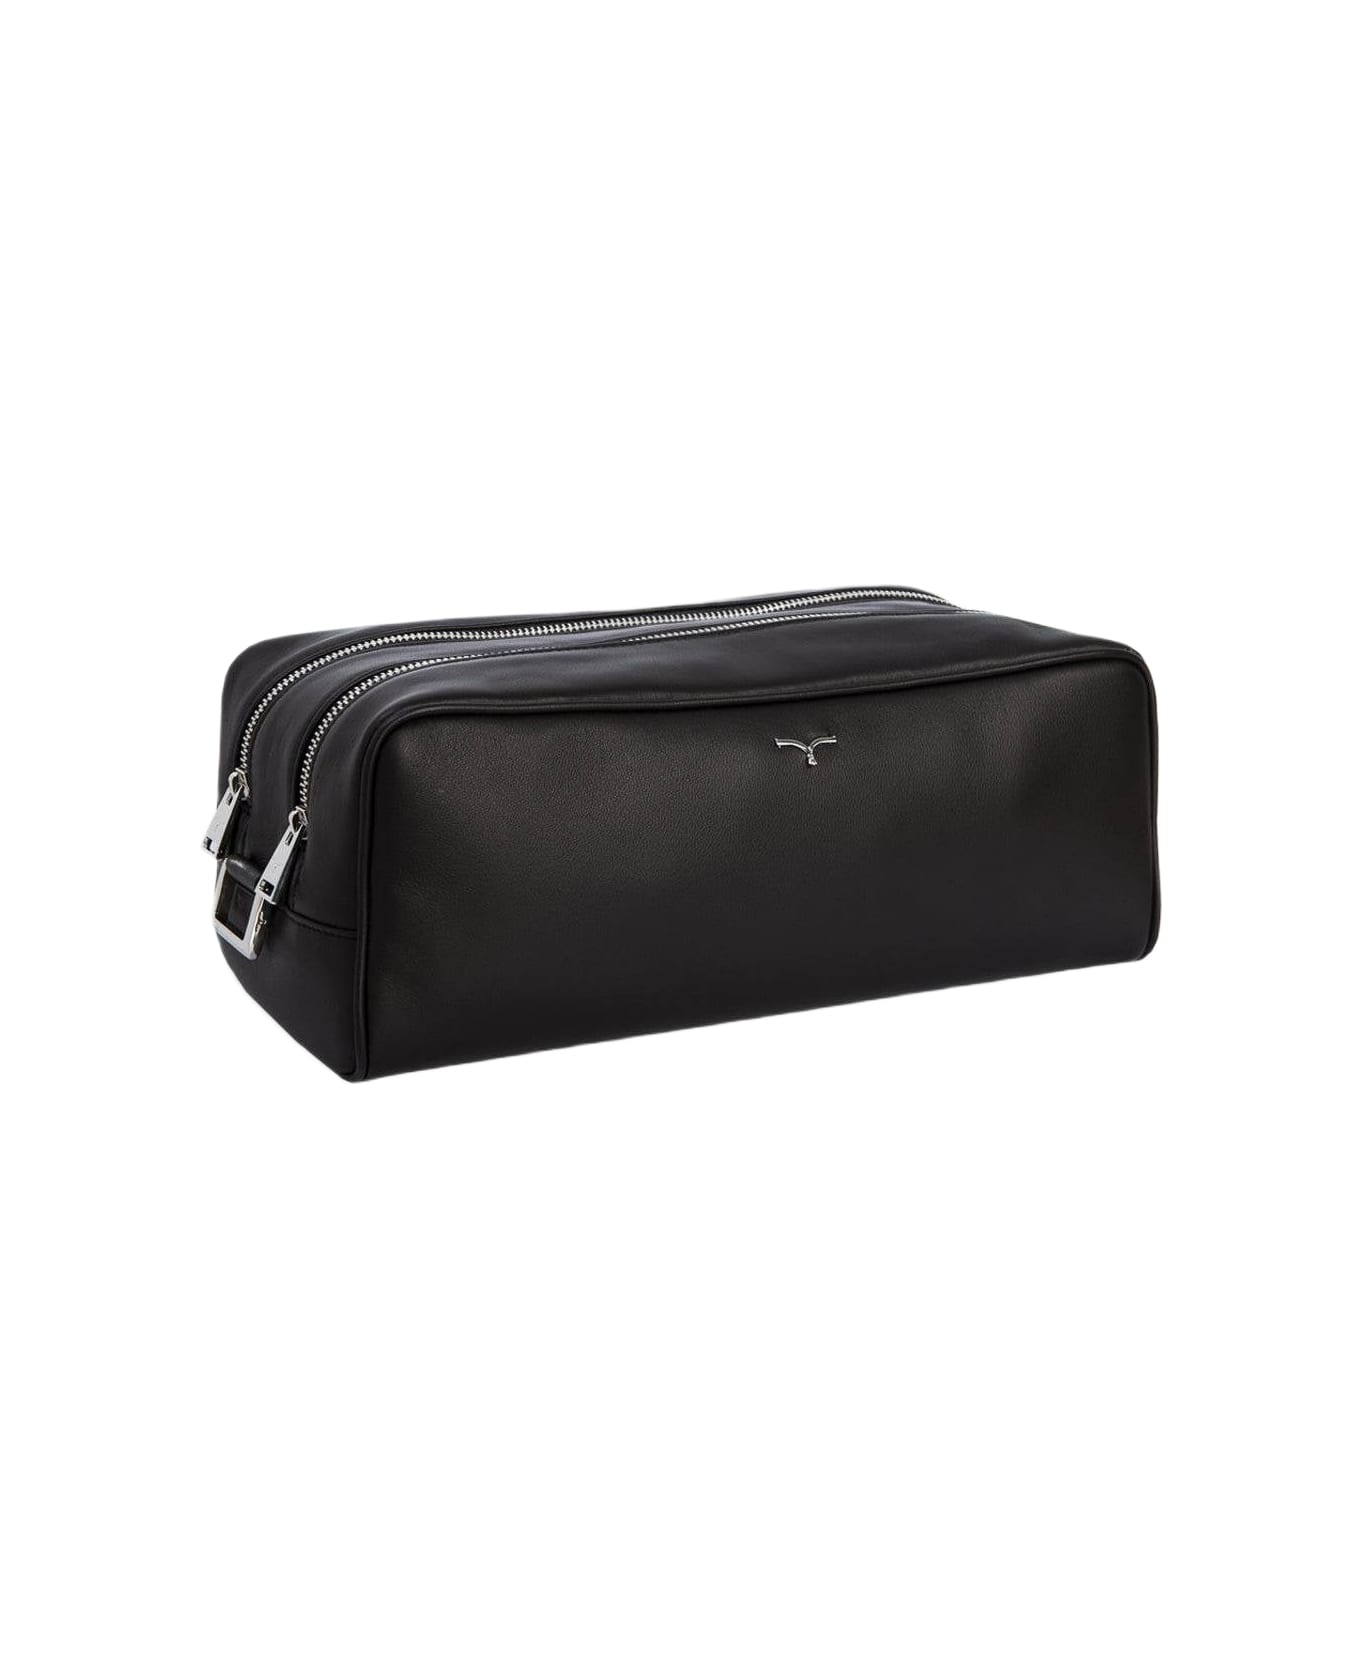 Larusmiani Wash Bag'tzar' Luggage - Black